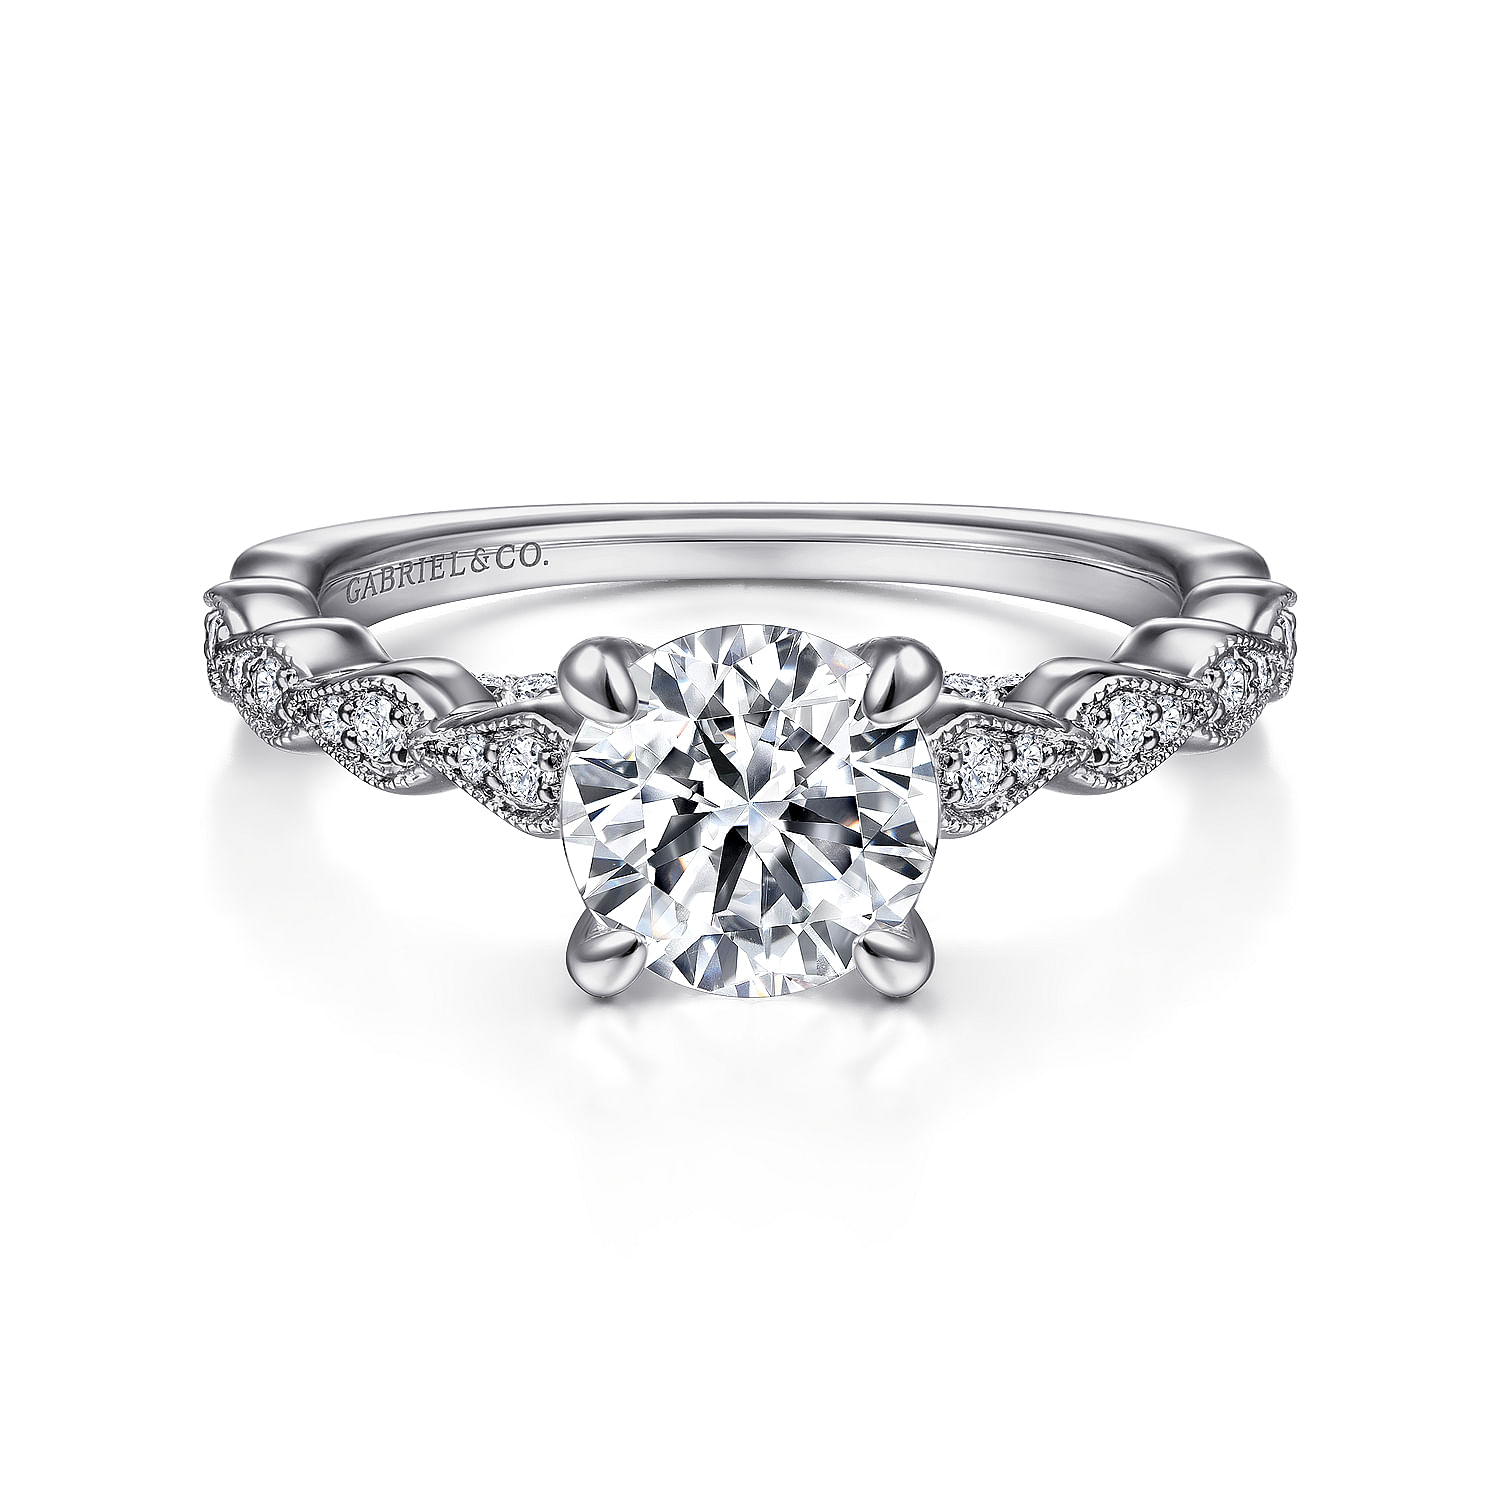 Vintage Inspired 14K White Gold Round  Diamond Engagement Ring